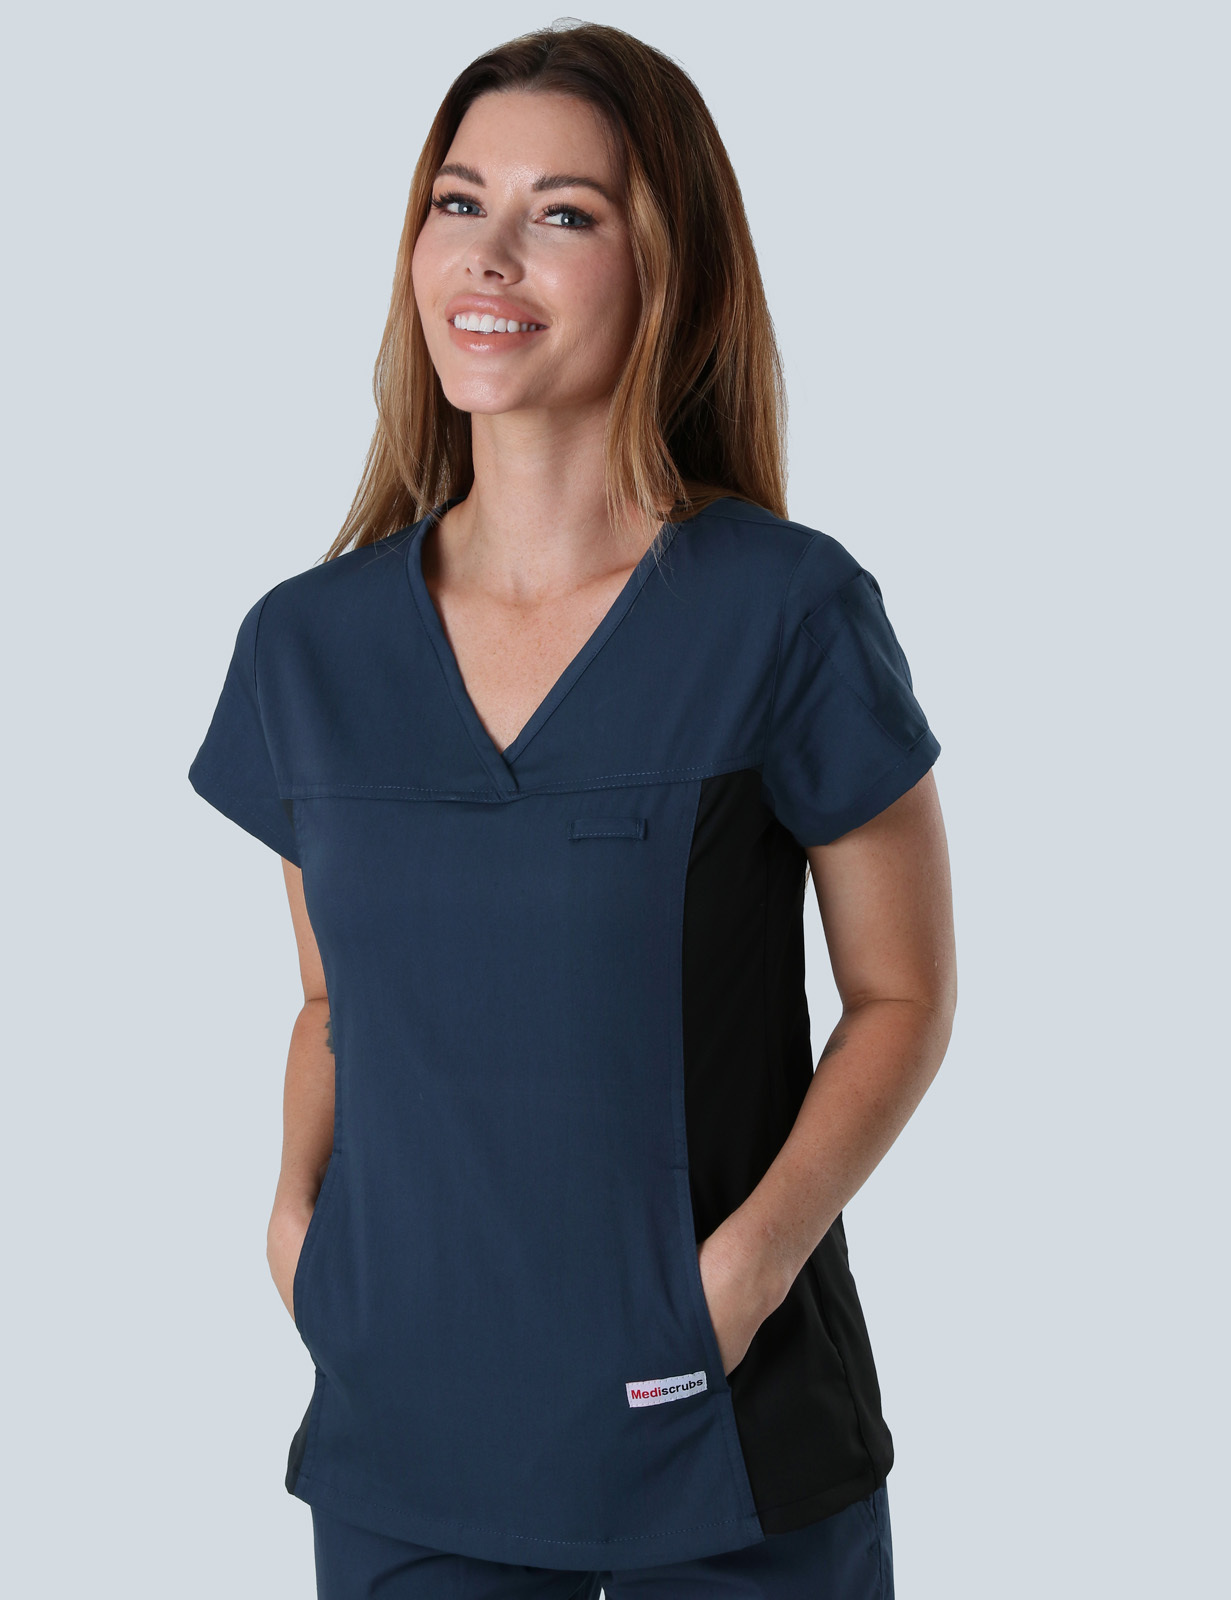 Biloela Hospital Healthcare Department Uniform Set Bundle (Women's Fit Spandex Top and Cargo pants in Navy incl Logos)